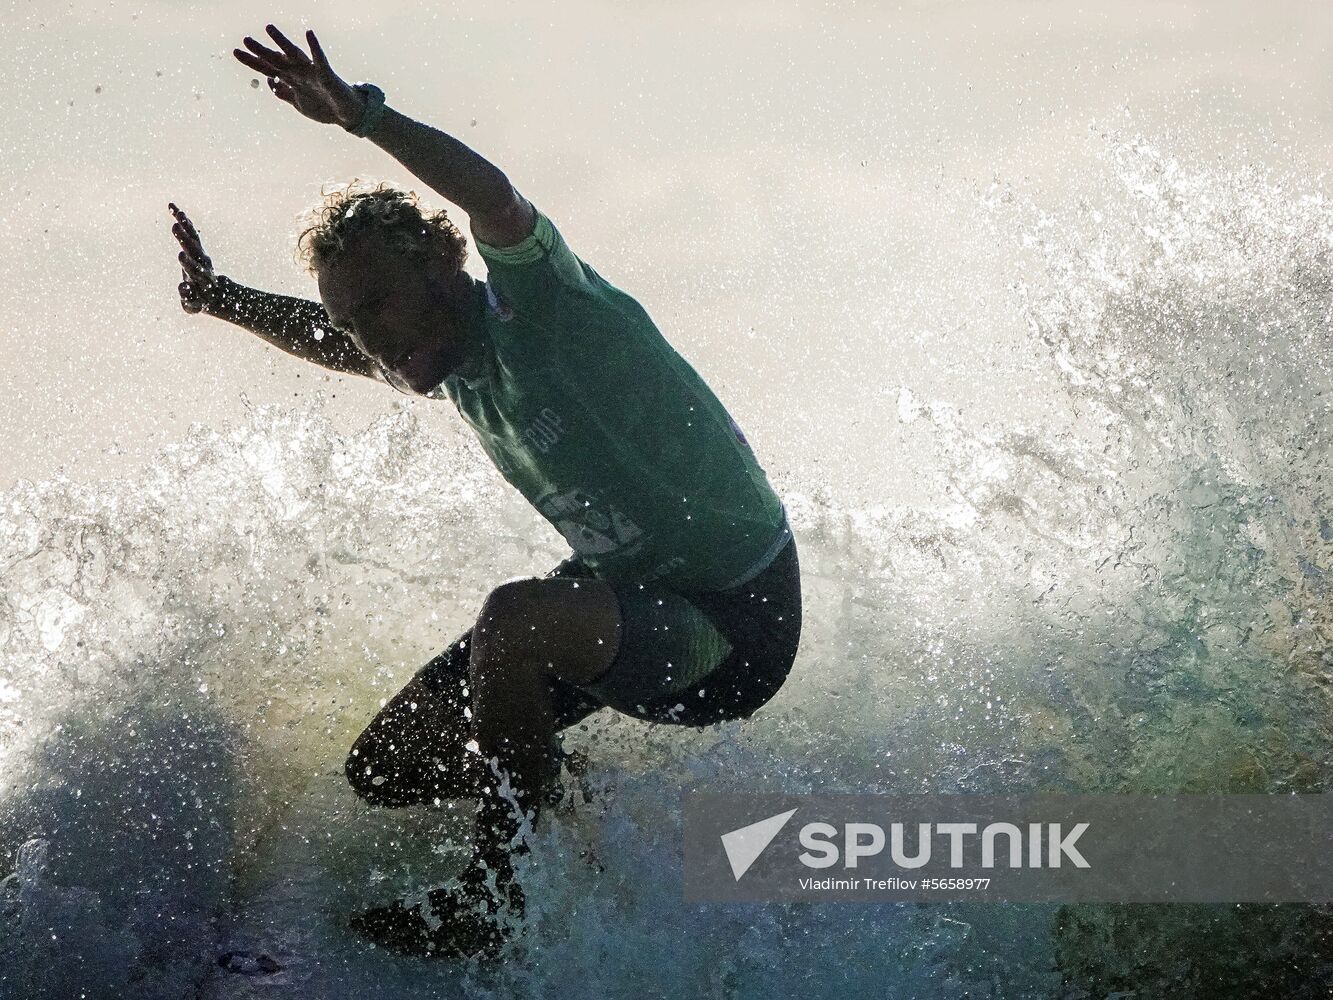 Russia Surfing Championship